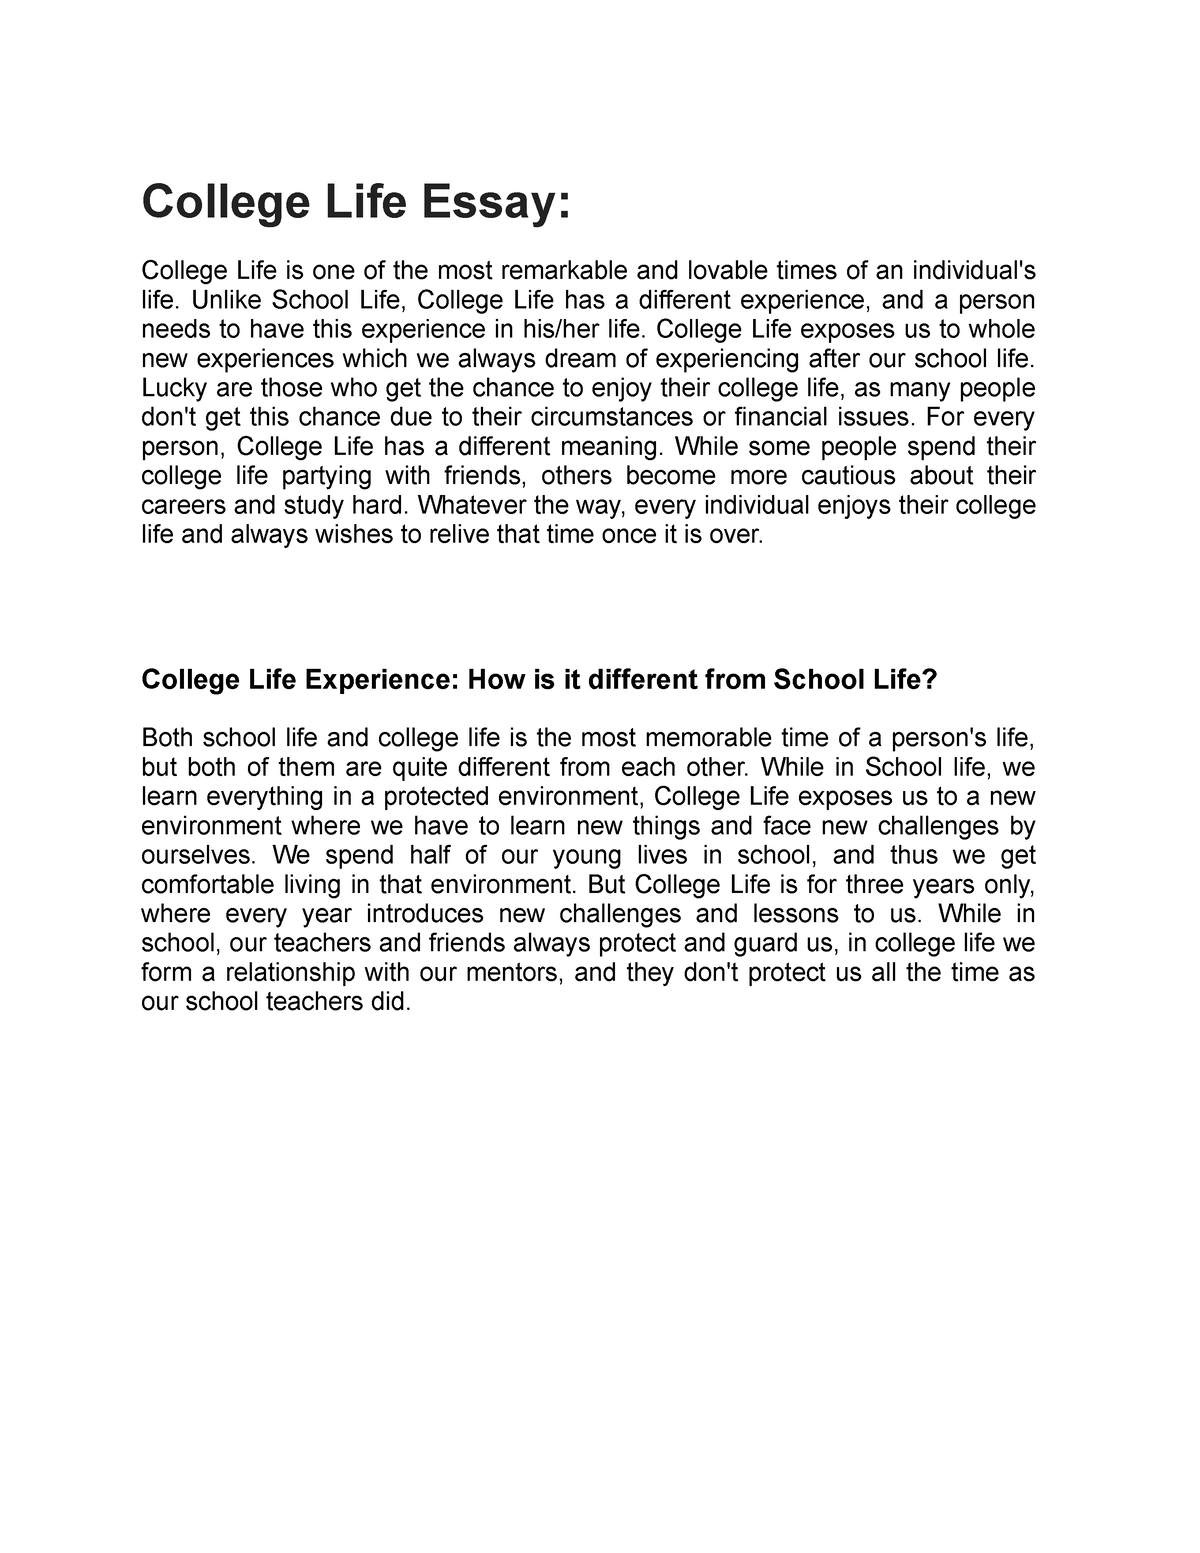 my views on college life essay